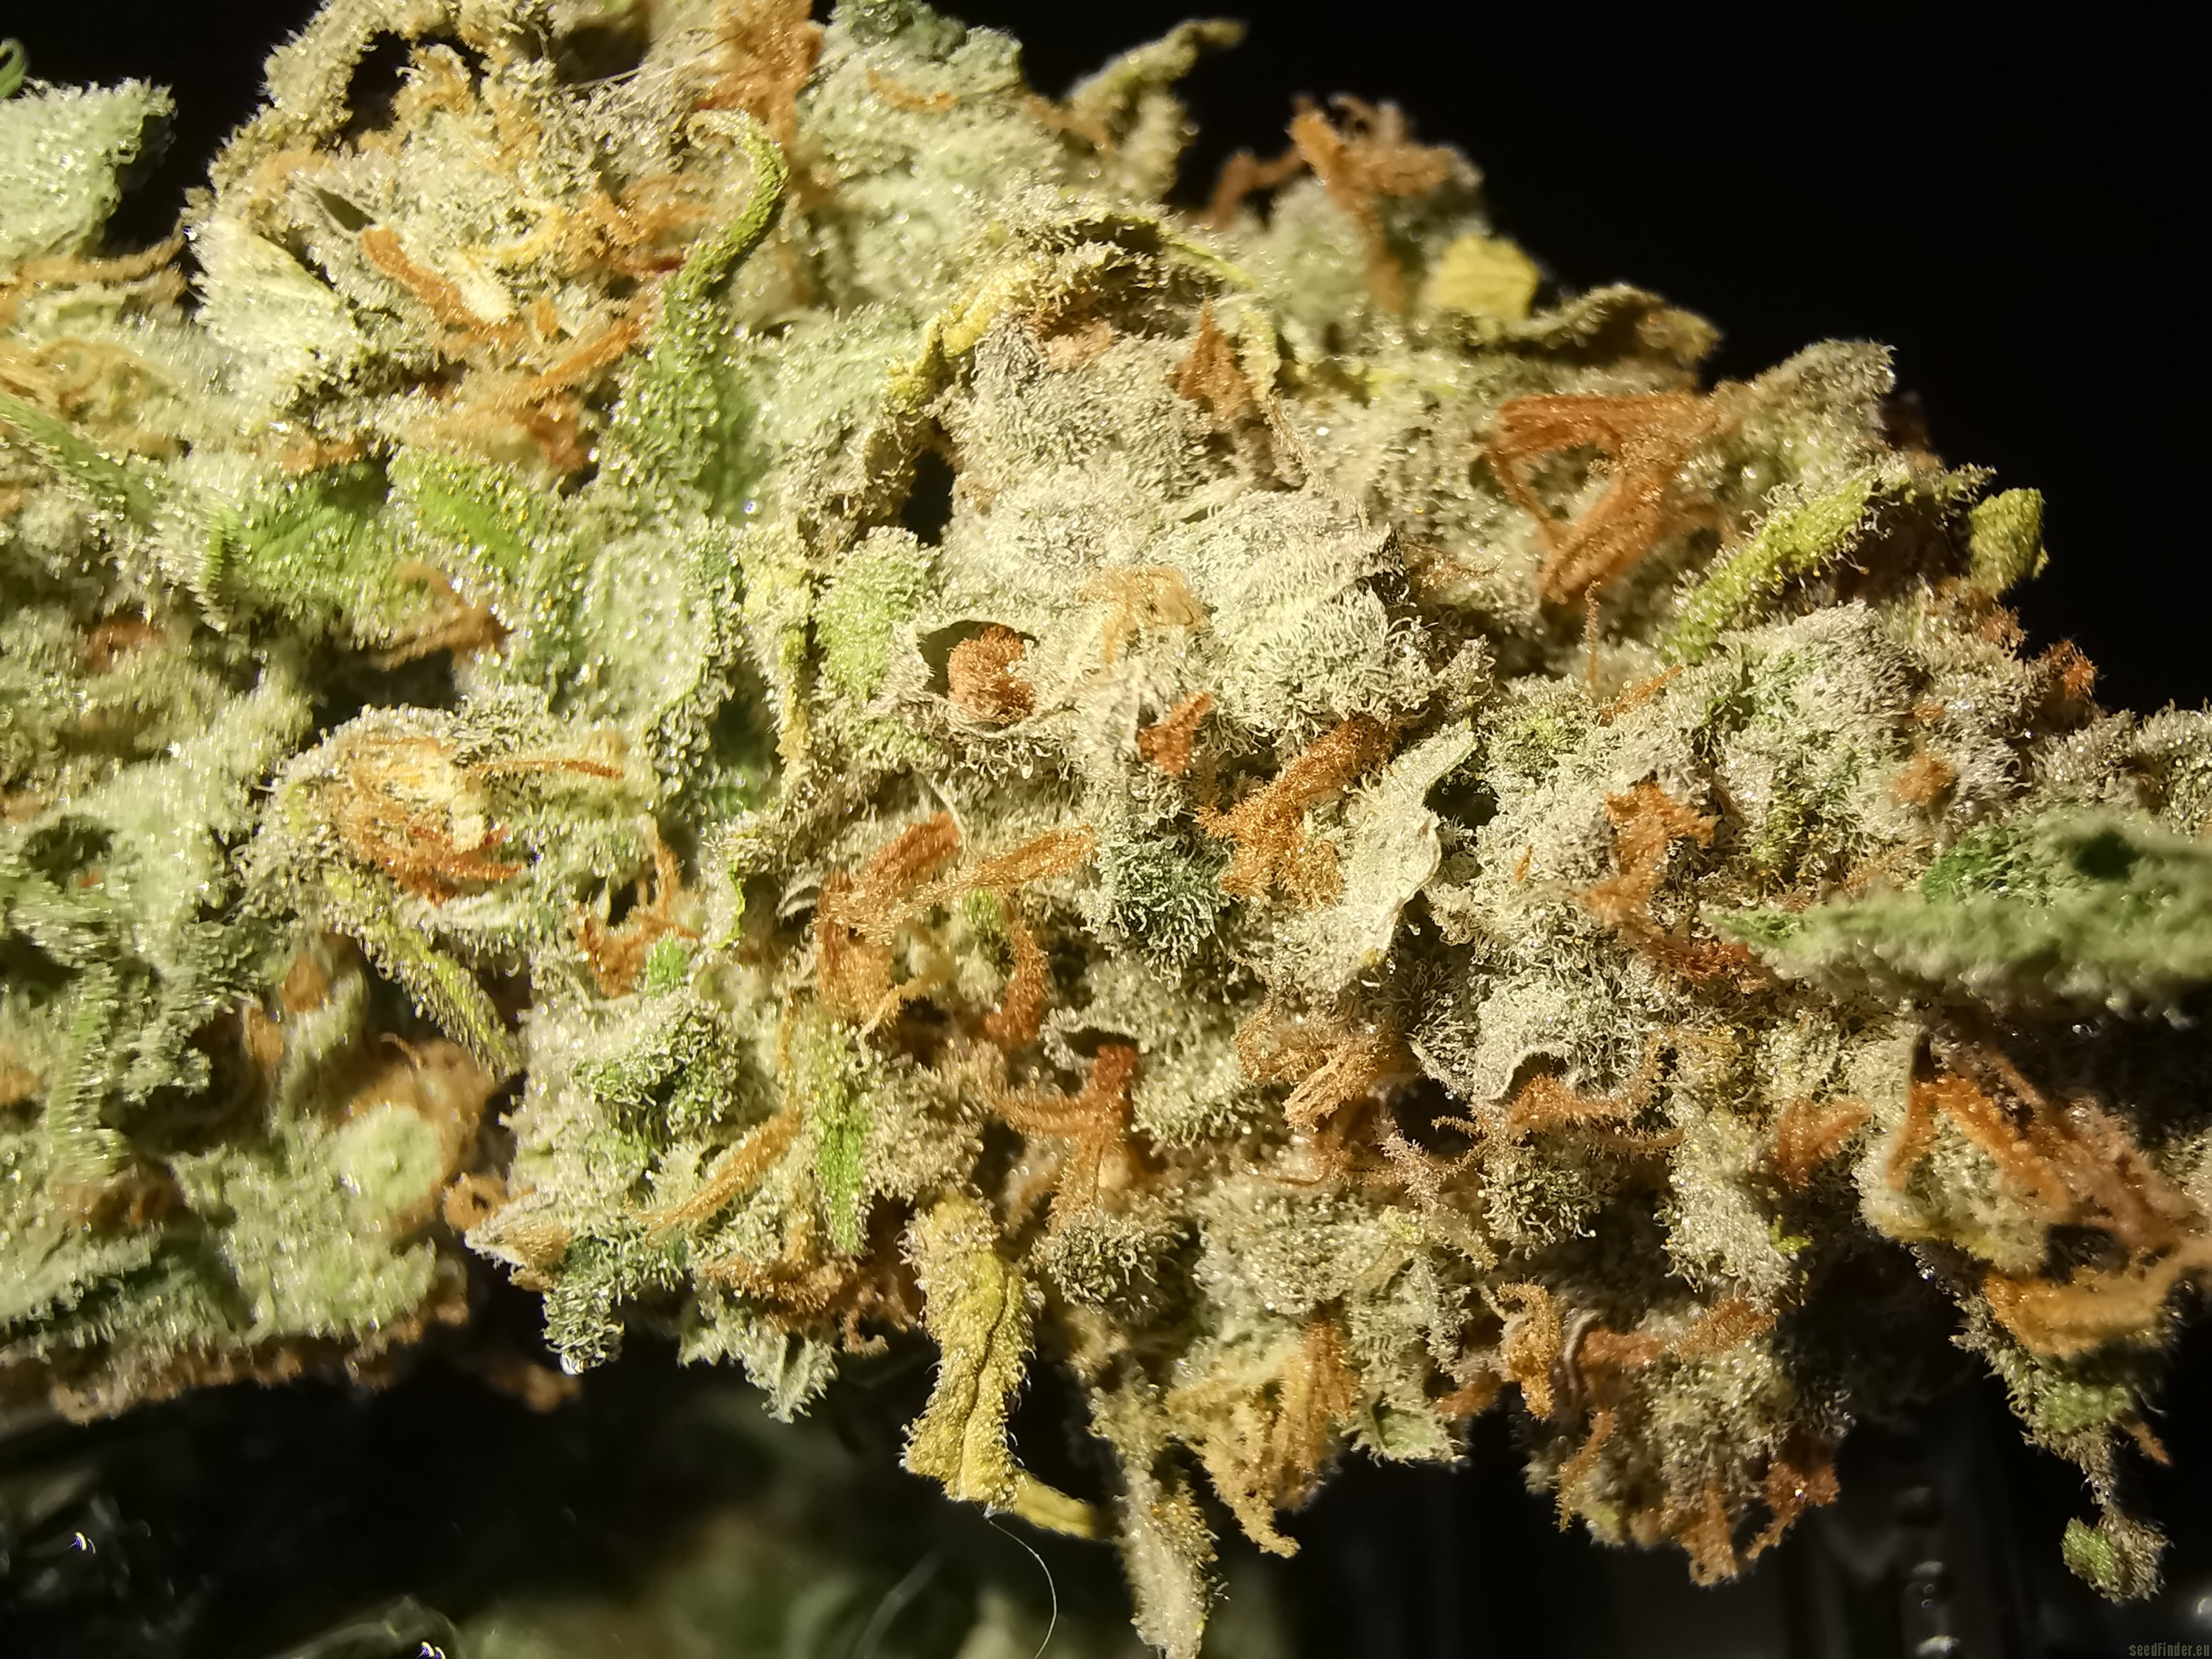 Royal Gorilla Glue Strain 🦍 Cannabis Seeds - Royal Queen Seeds USA